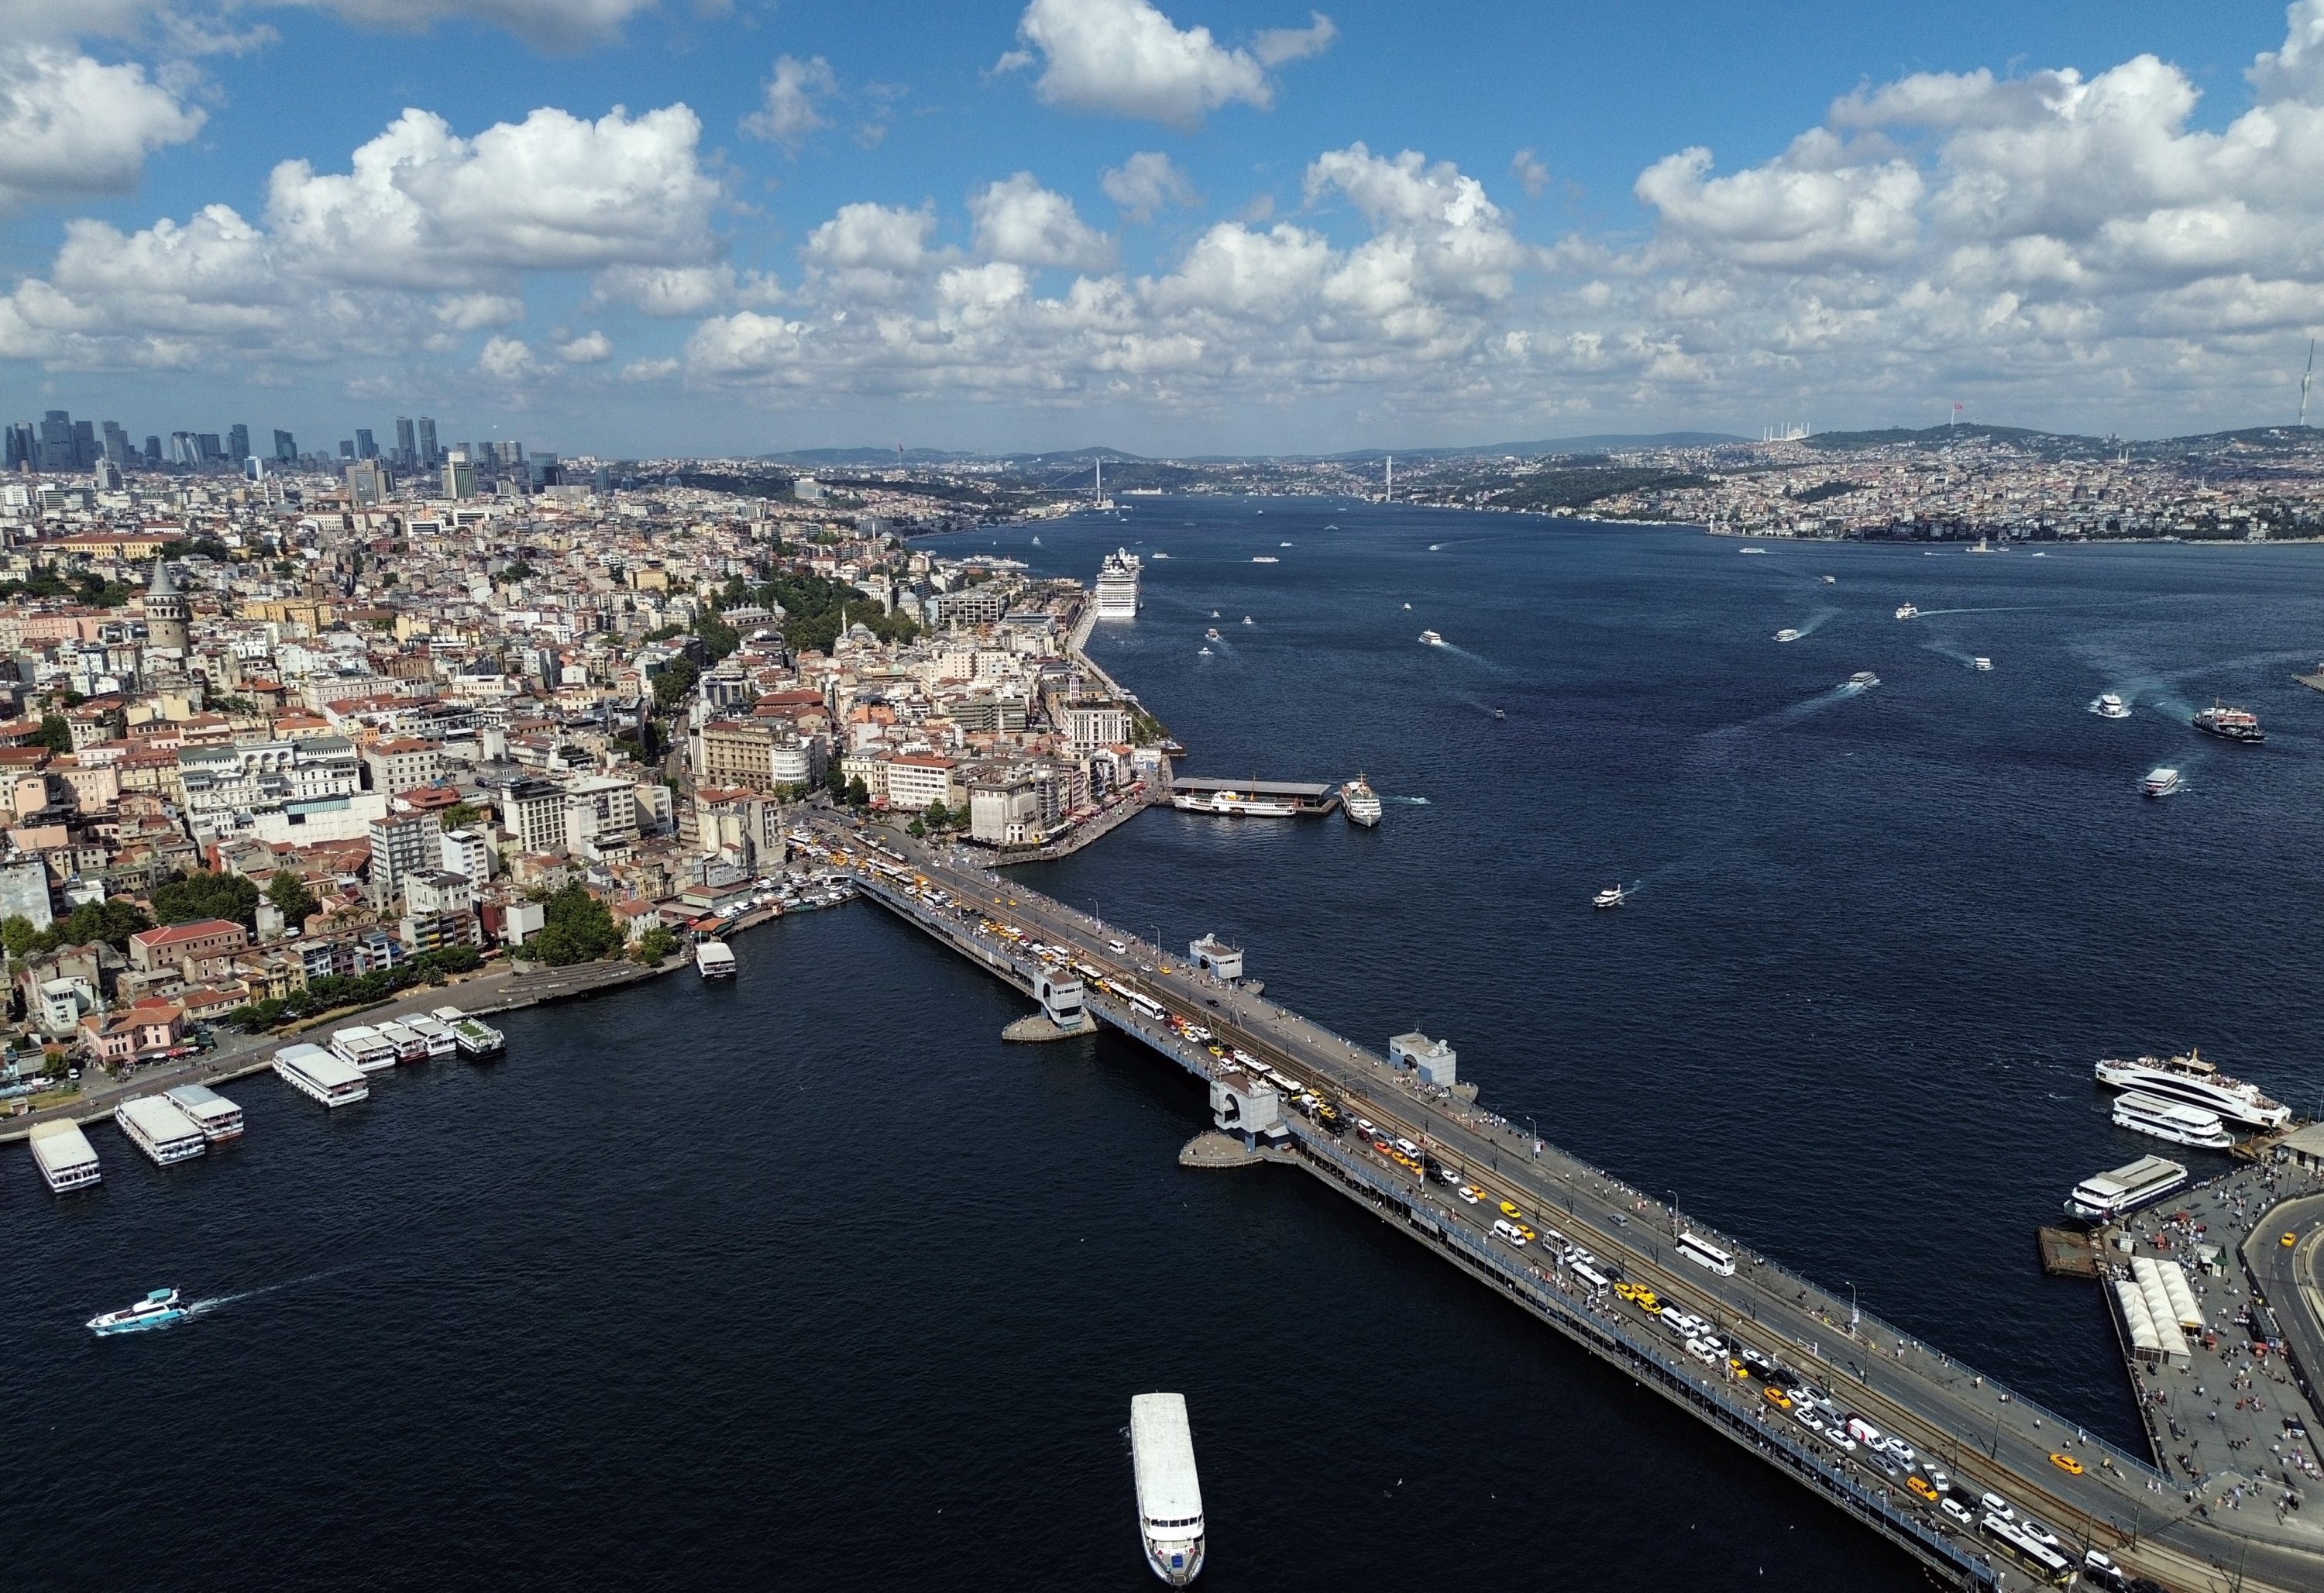 Istanbul Galata Bridge overhaul ushers in traffic woes | Daily Sabah